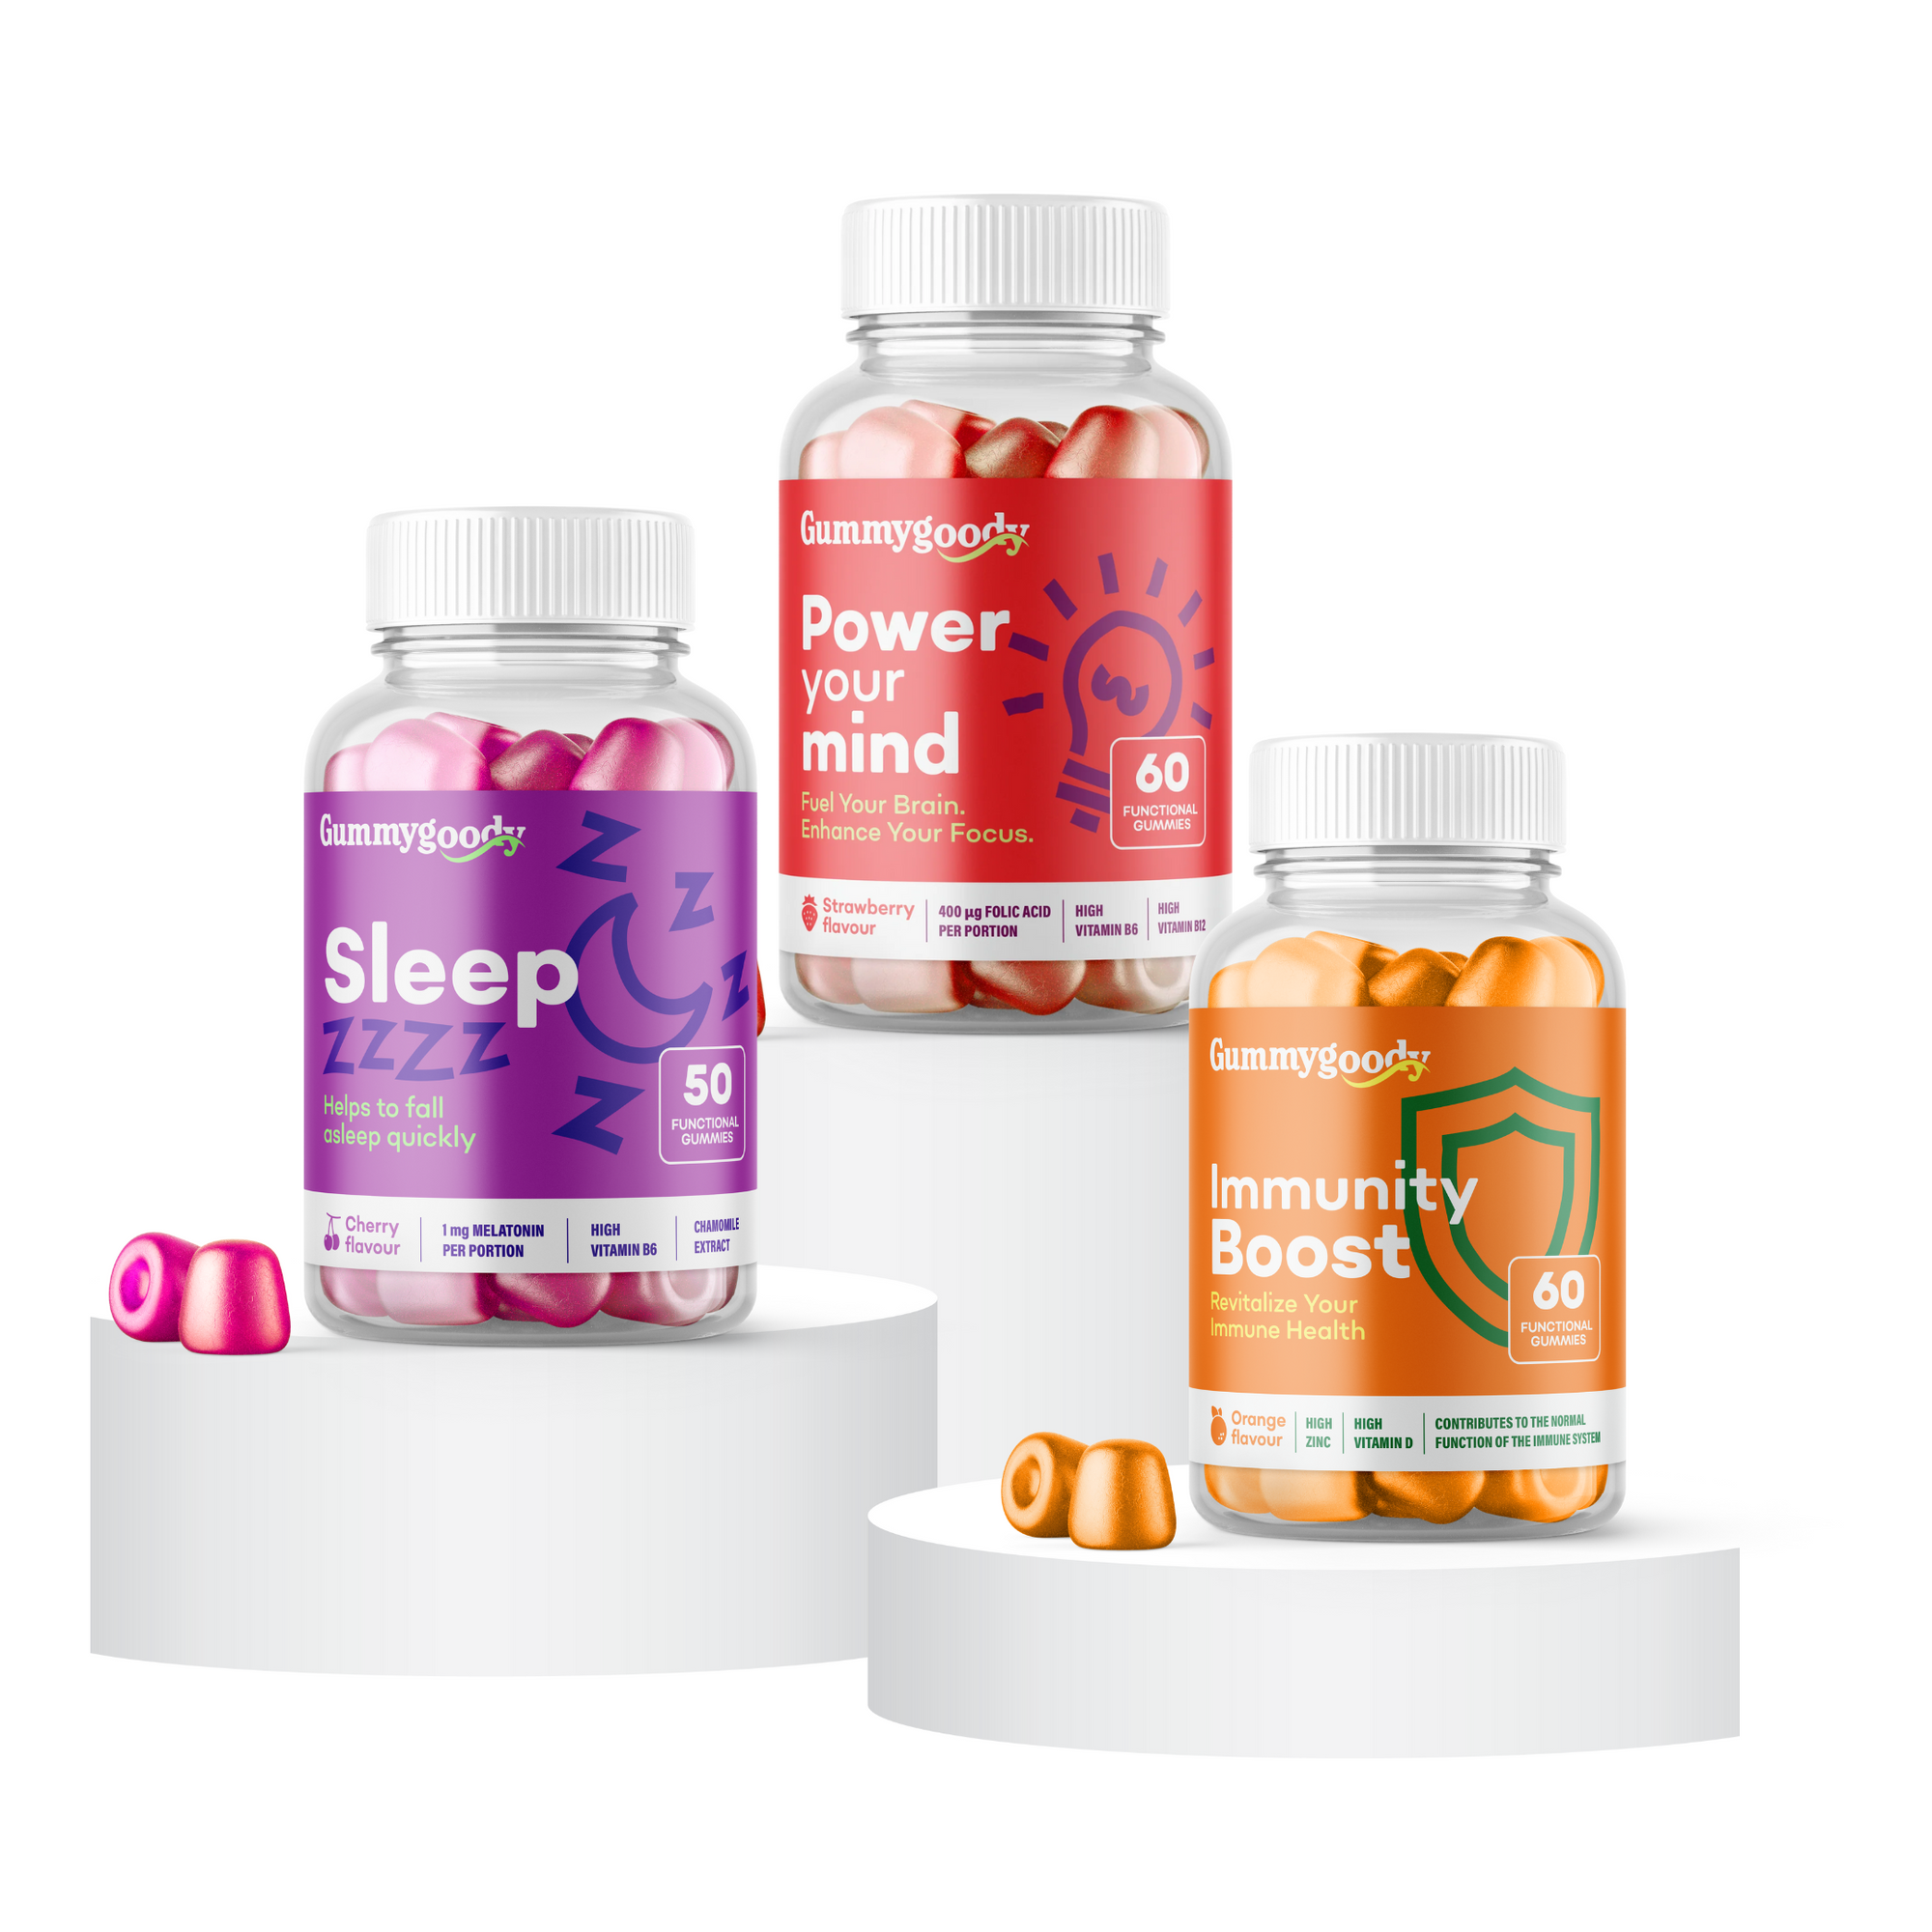 Gummygoody Vitamins - Trio of Sleep, Immunity and Power Your Mind